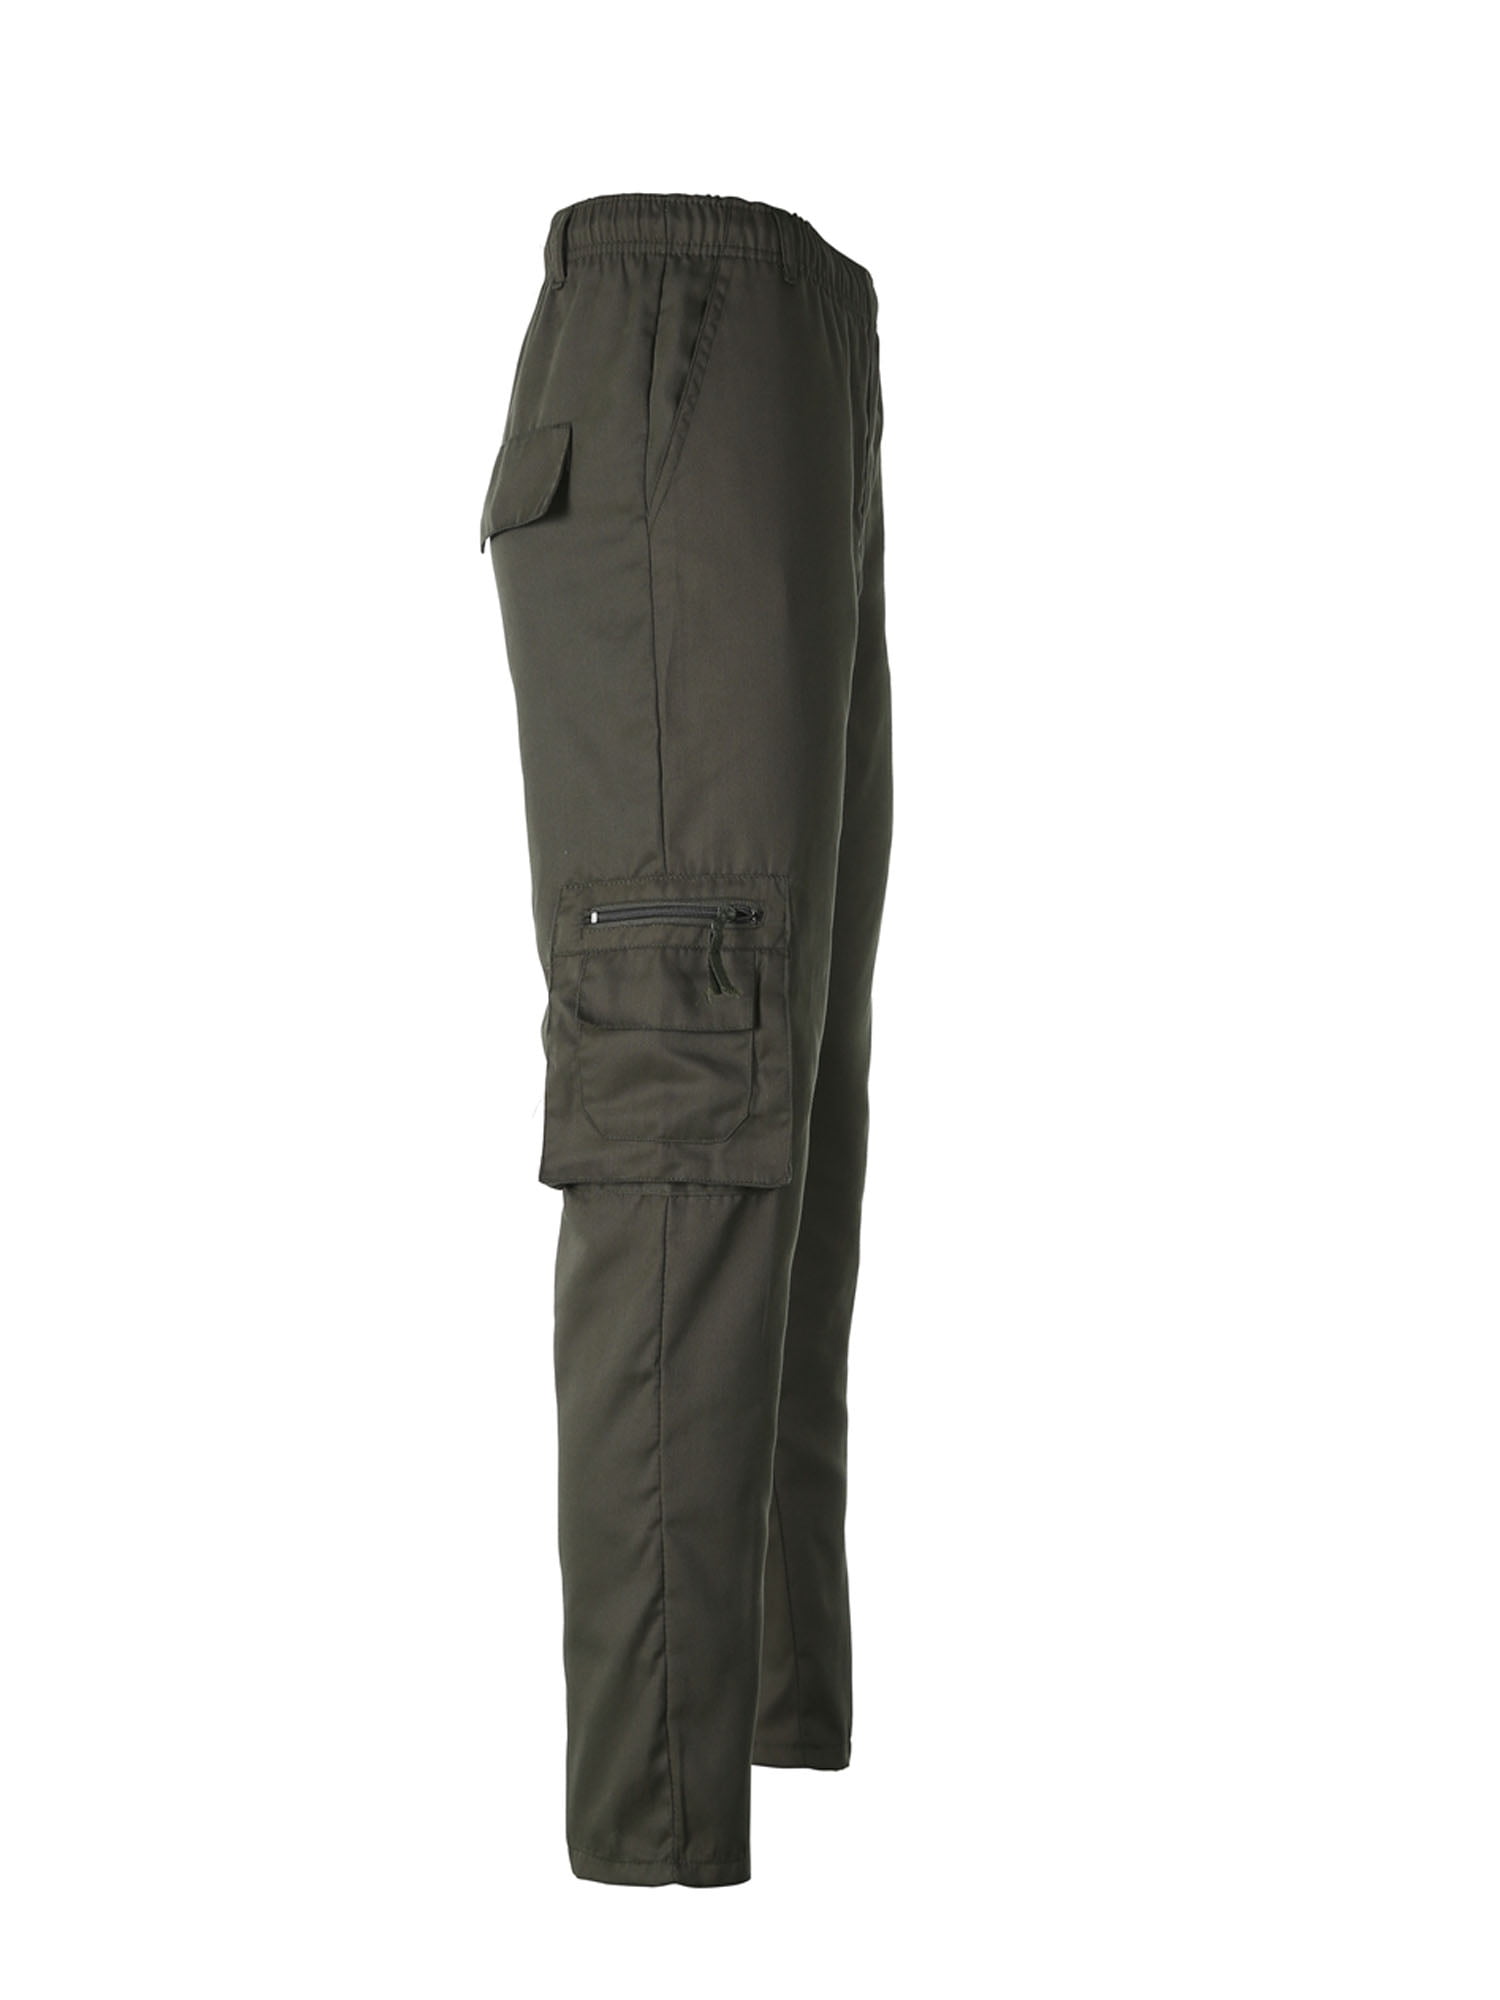 SUNSIOM Men Cargo Pants,Slim Fit Zipper Elastic Joggers Work Military ...